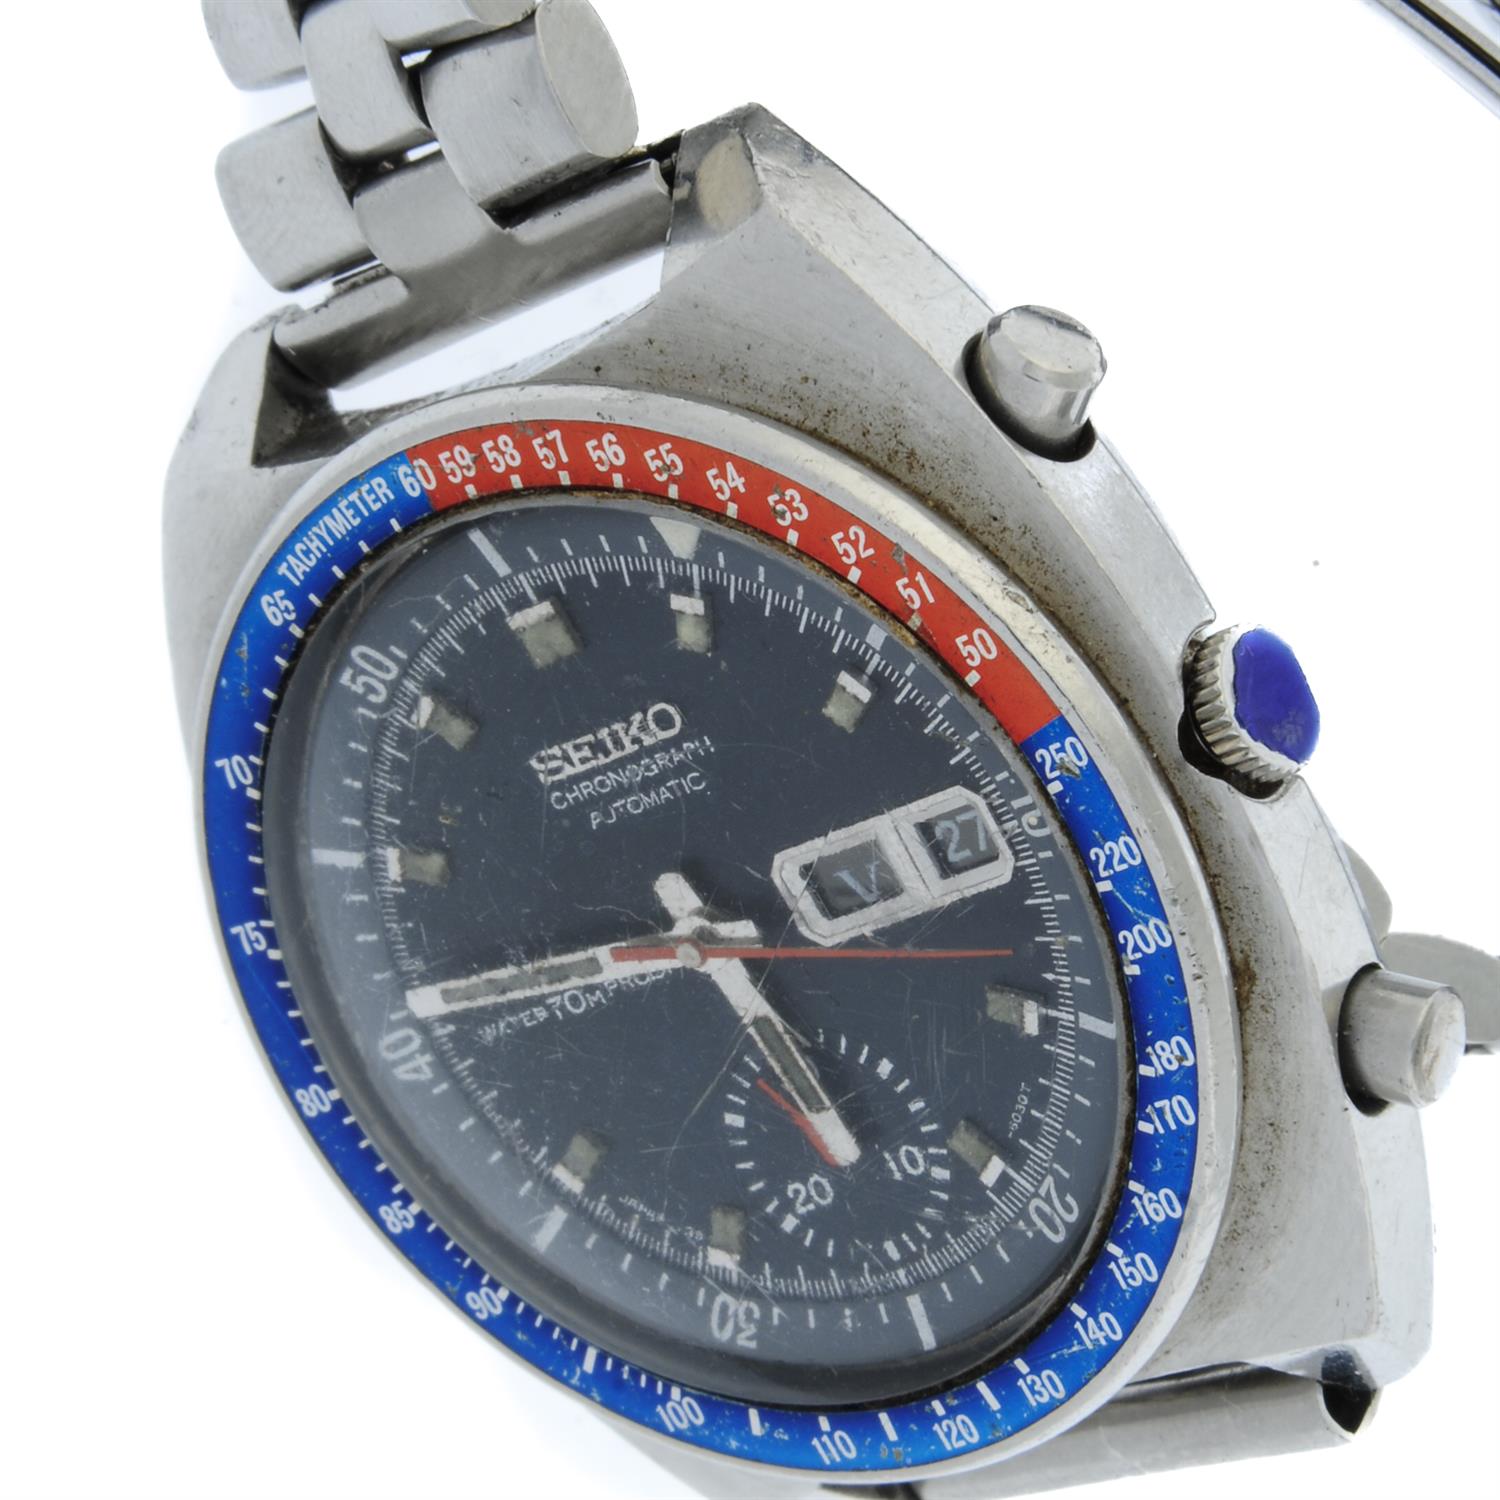 Seiko - a 'Pogue' chronograph watch, 41mm. - Image 3 of 4